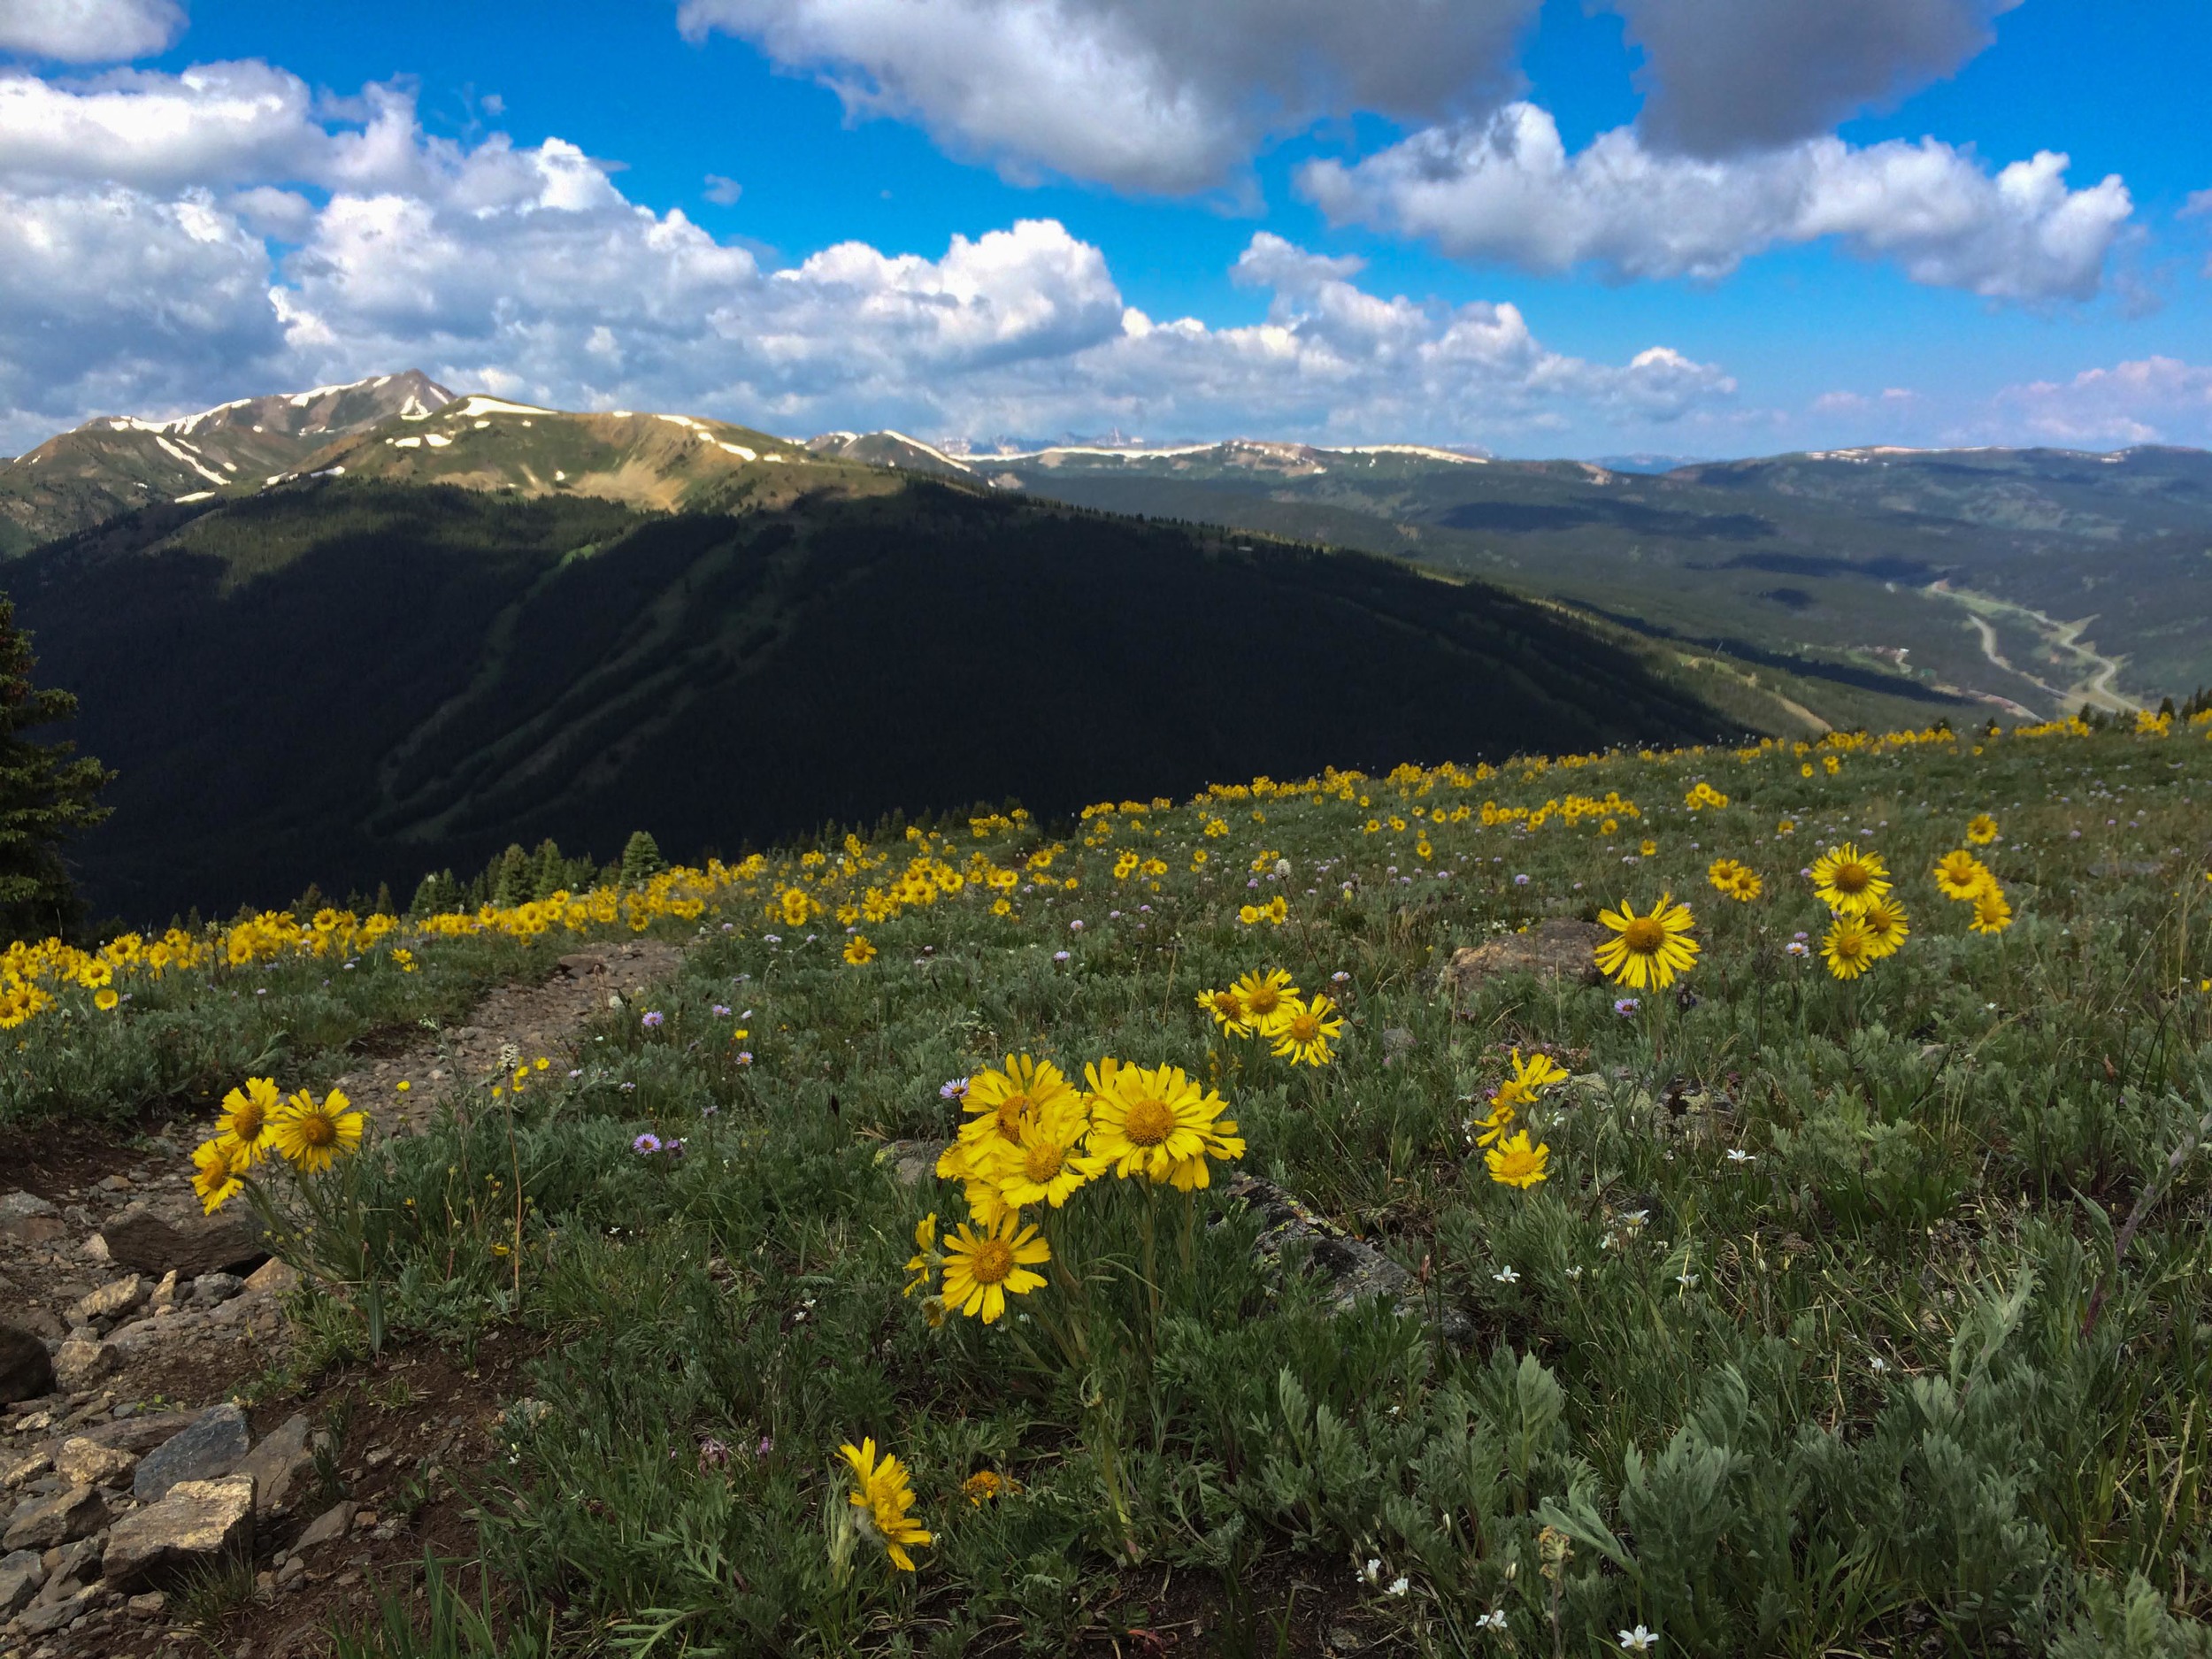  Wildflowers on the Ten Mile Range, just outside Breckenridge. PHOTO BY WILLOW BELDEN 